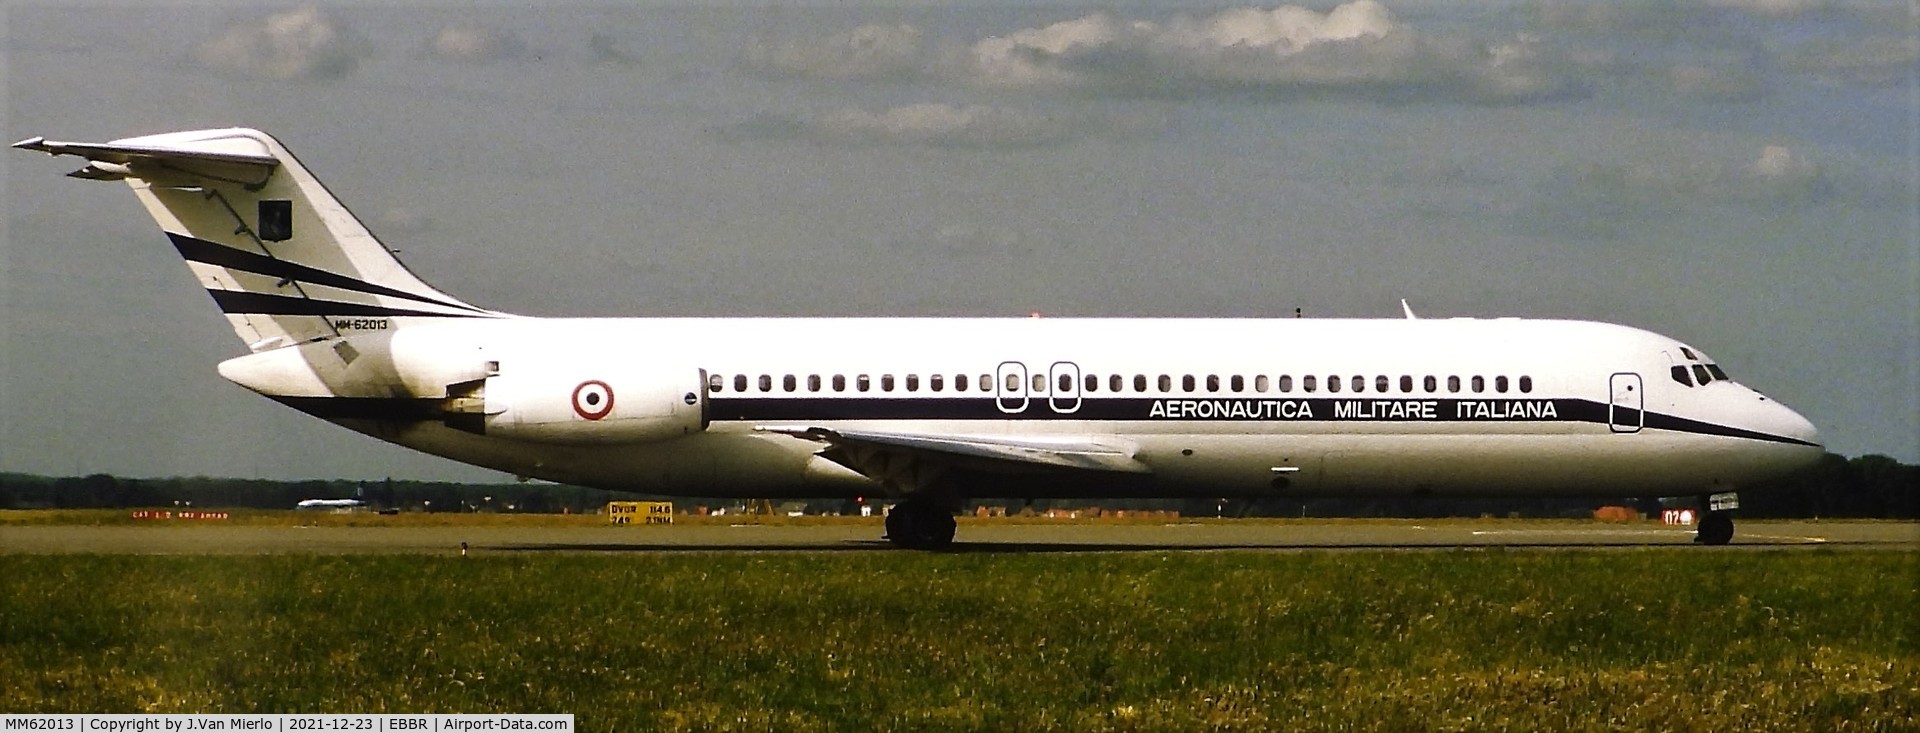 MM62013, 1974 Douglas DC-9-32 C/N 47600, Slide scan